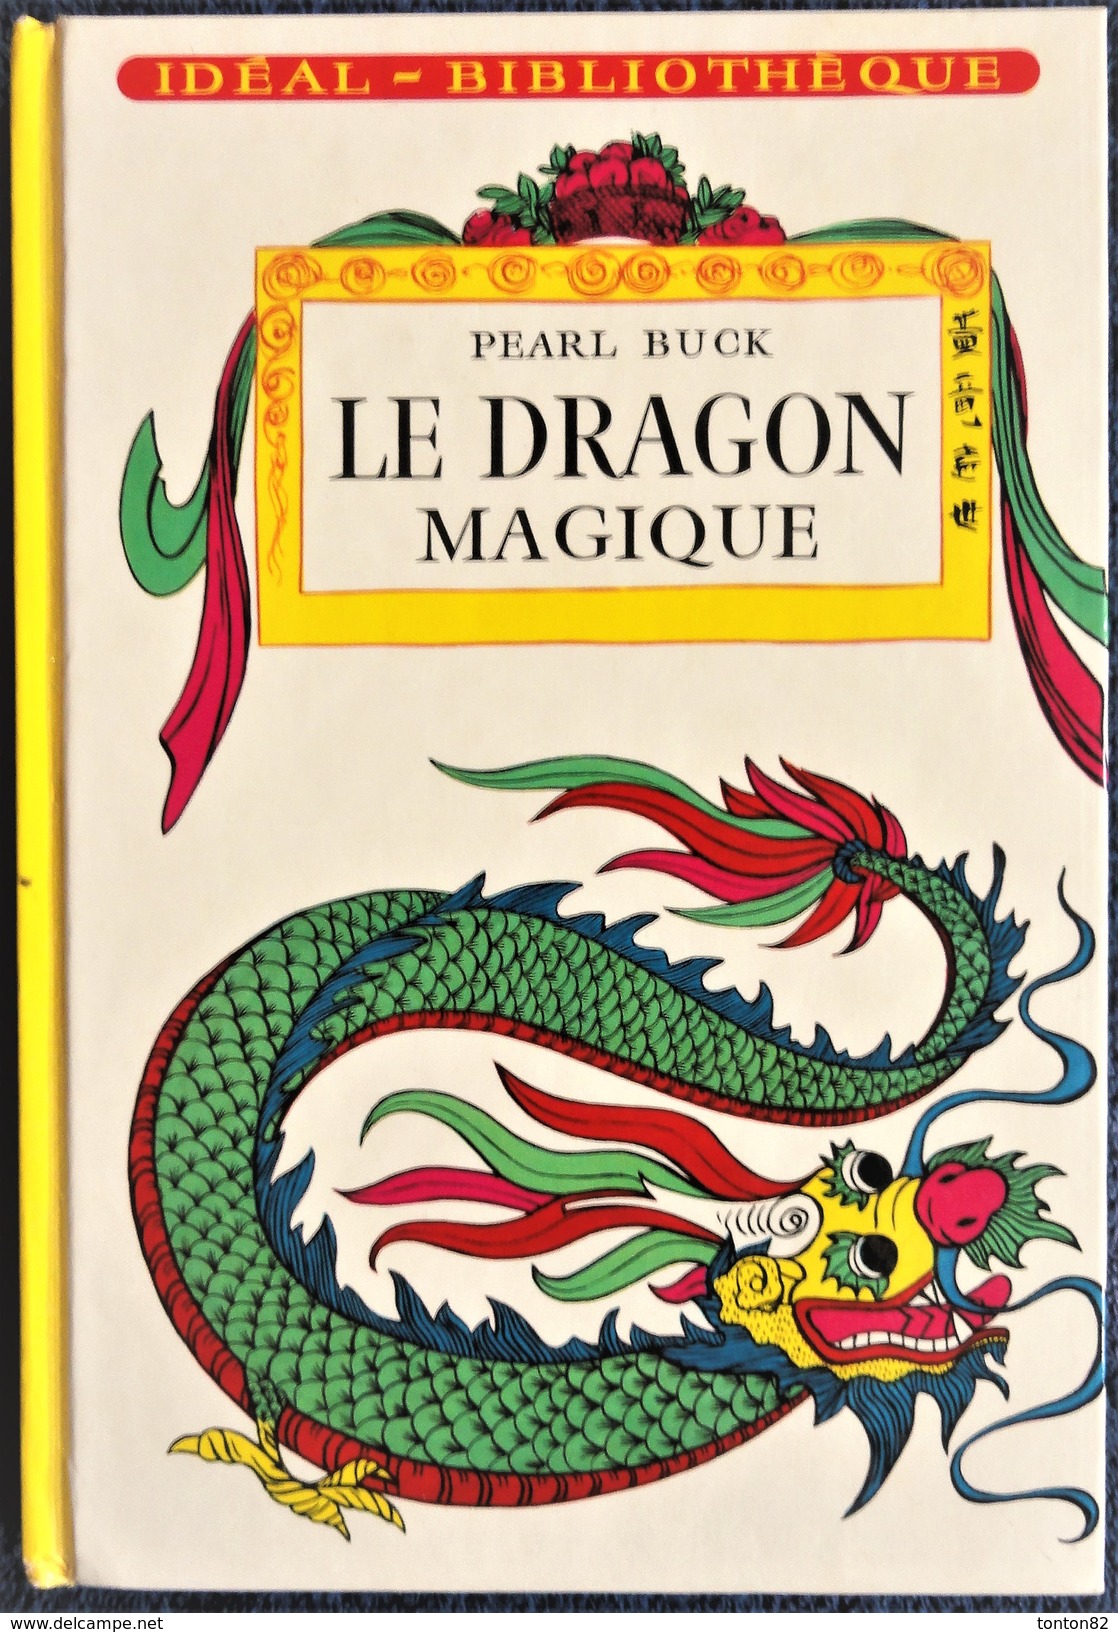 Pearl Buck - Le Dragon Magique - Idéal - Bibliothèque - ( 1972 ) . - Ideal Bibliotheque